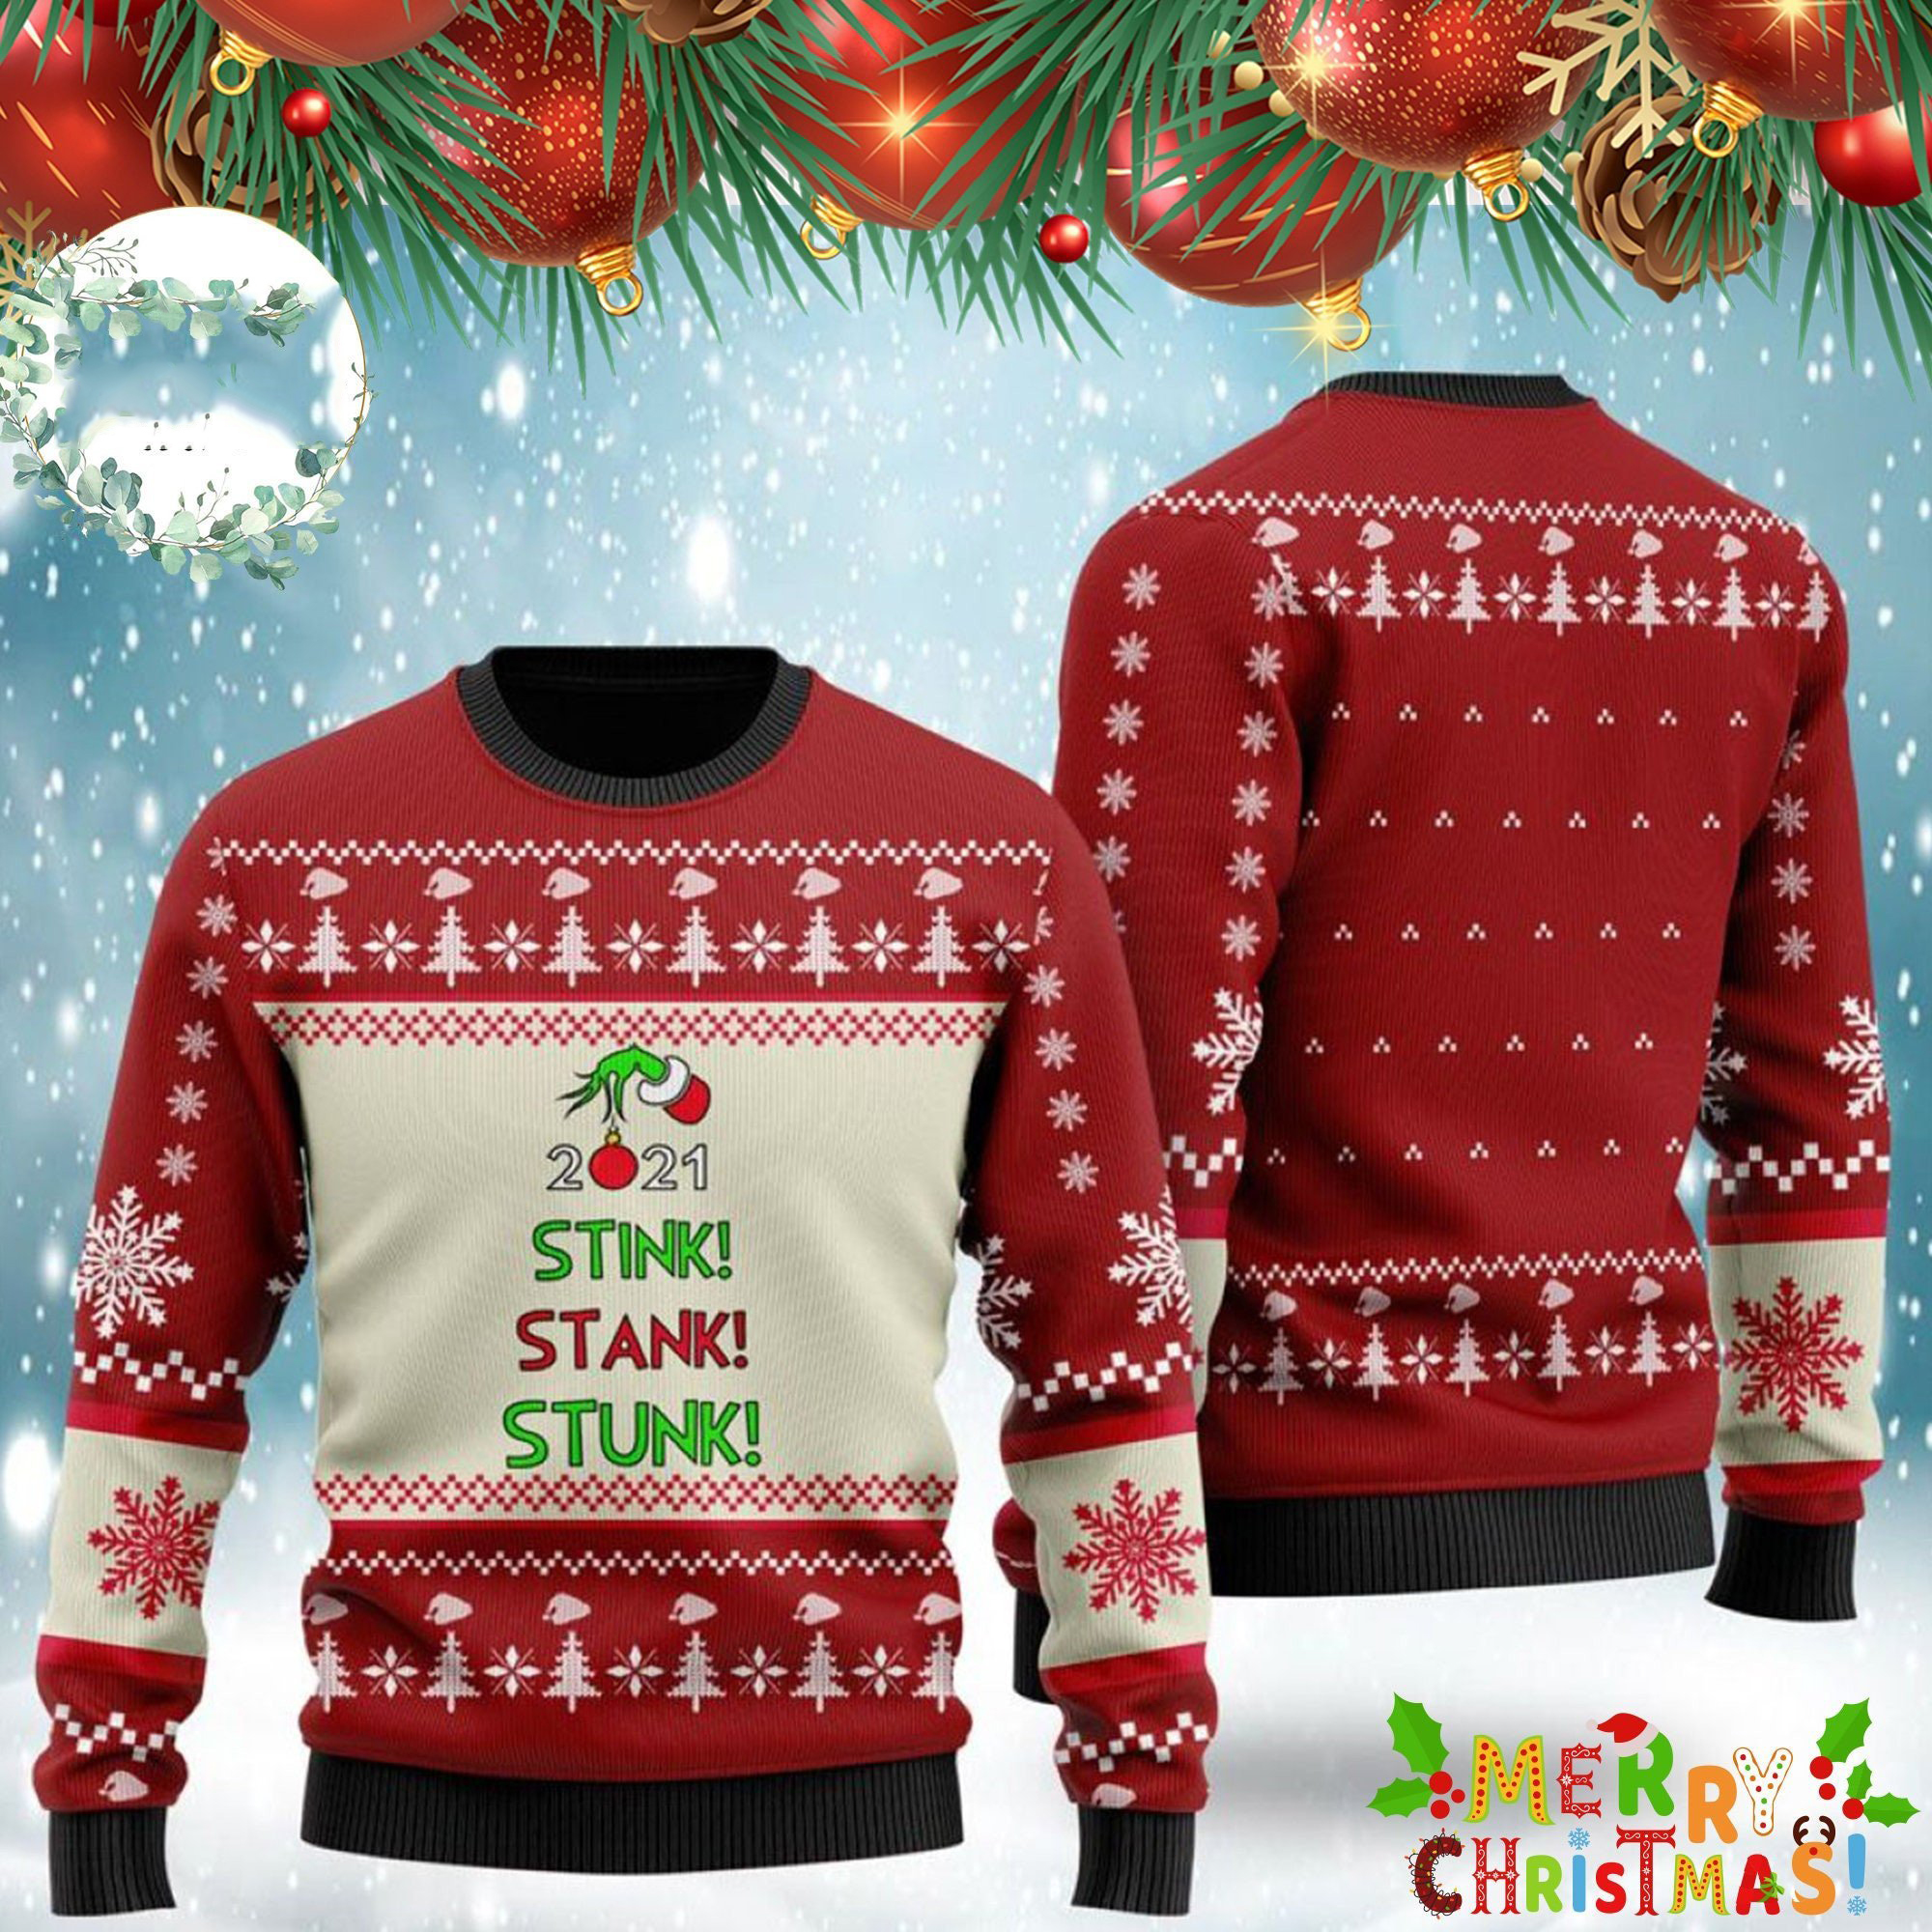 [ COOL ] Grinch 2021 stink stank stunk ugly sweater – Saleoff 180122